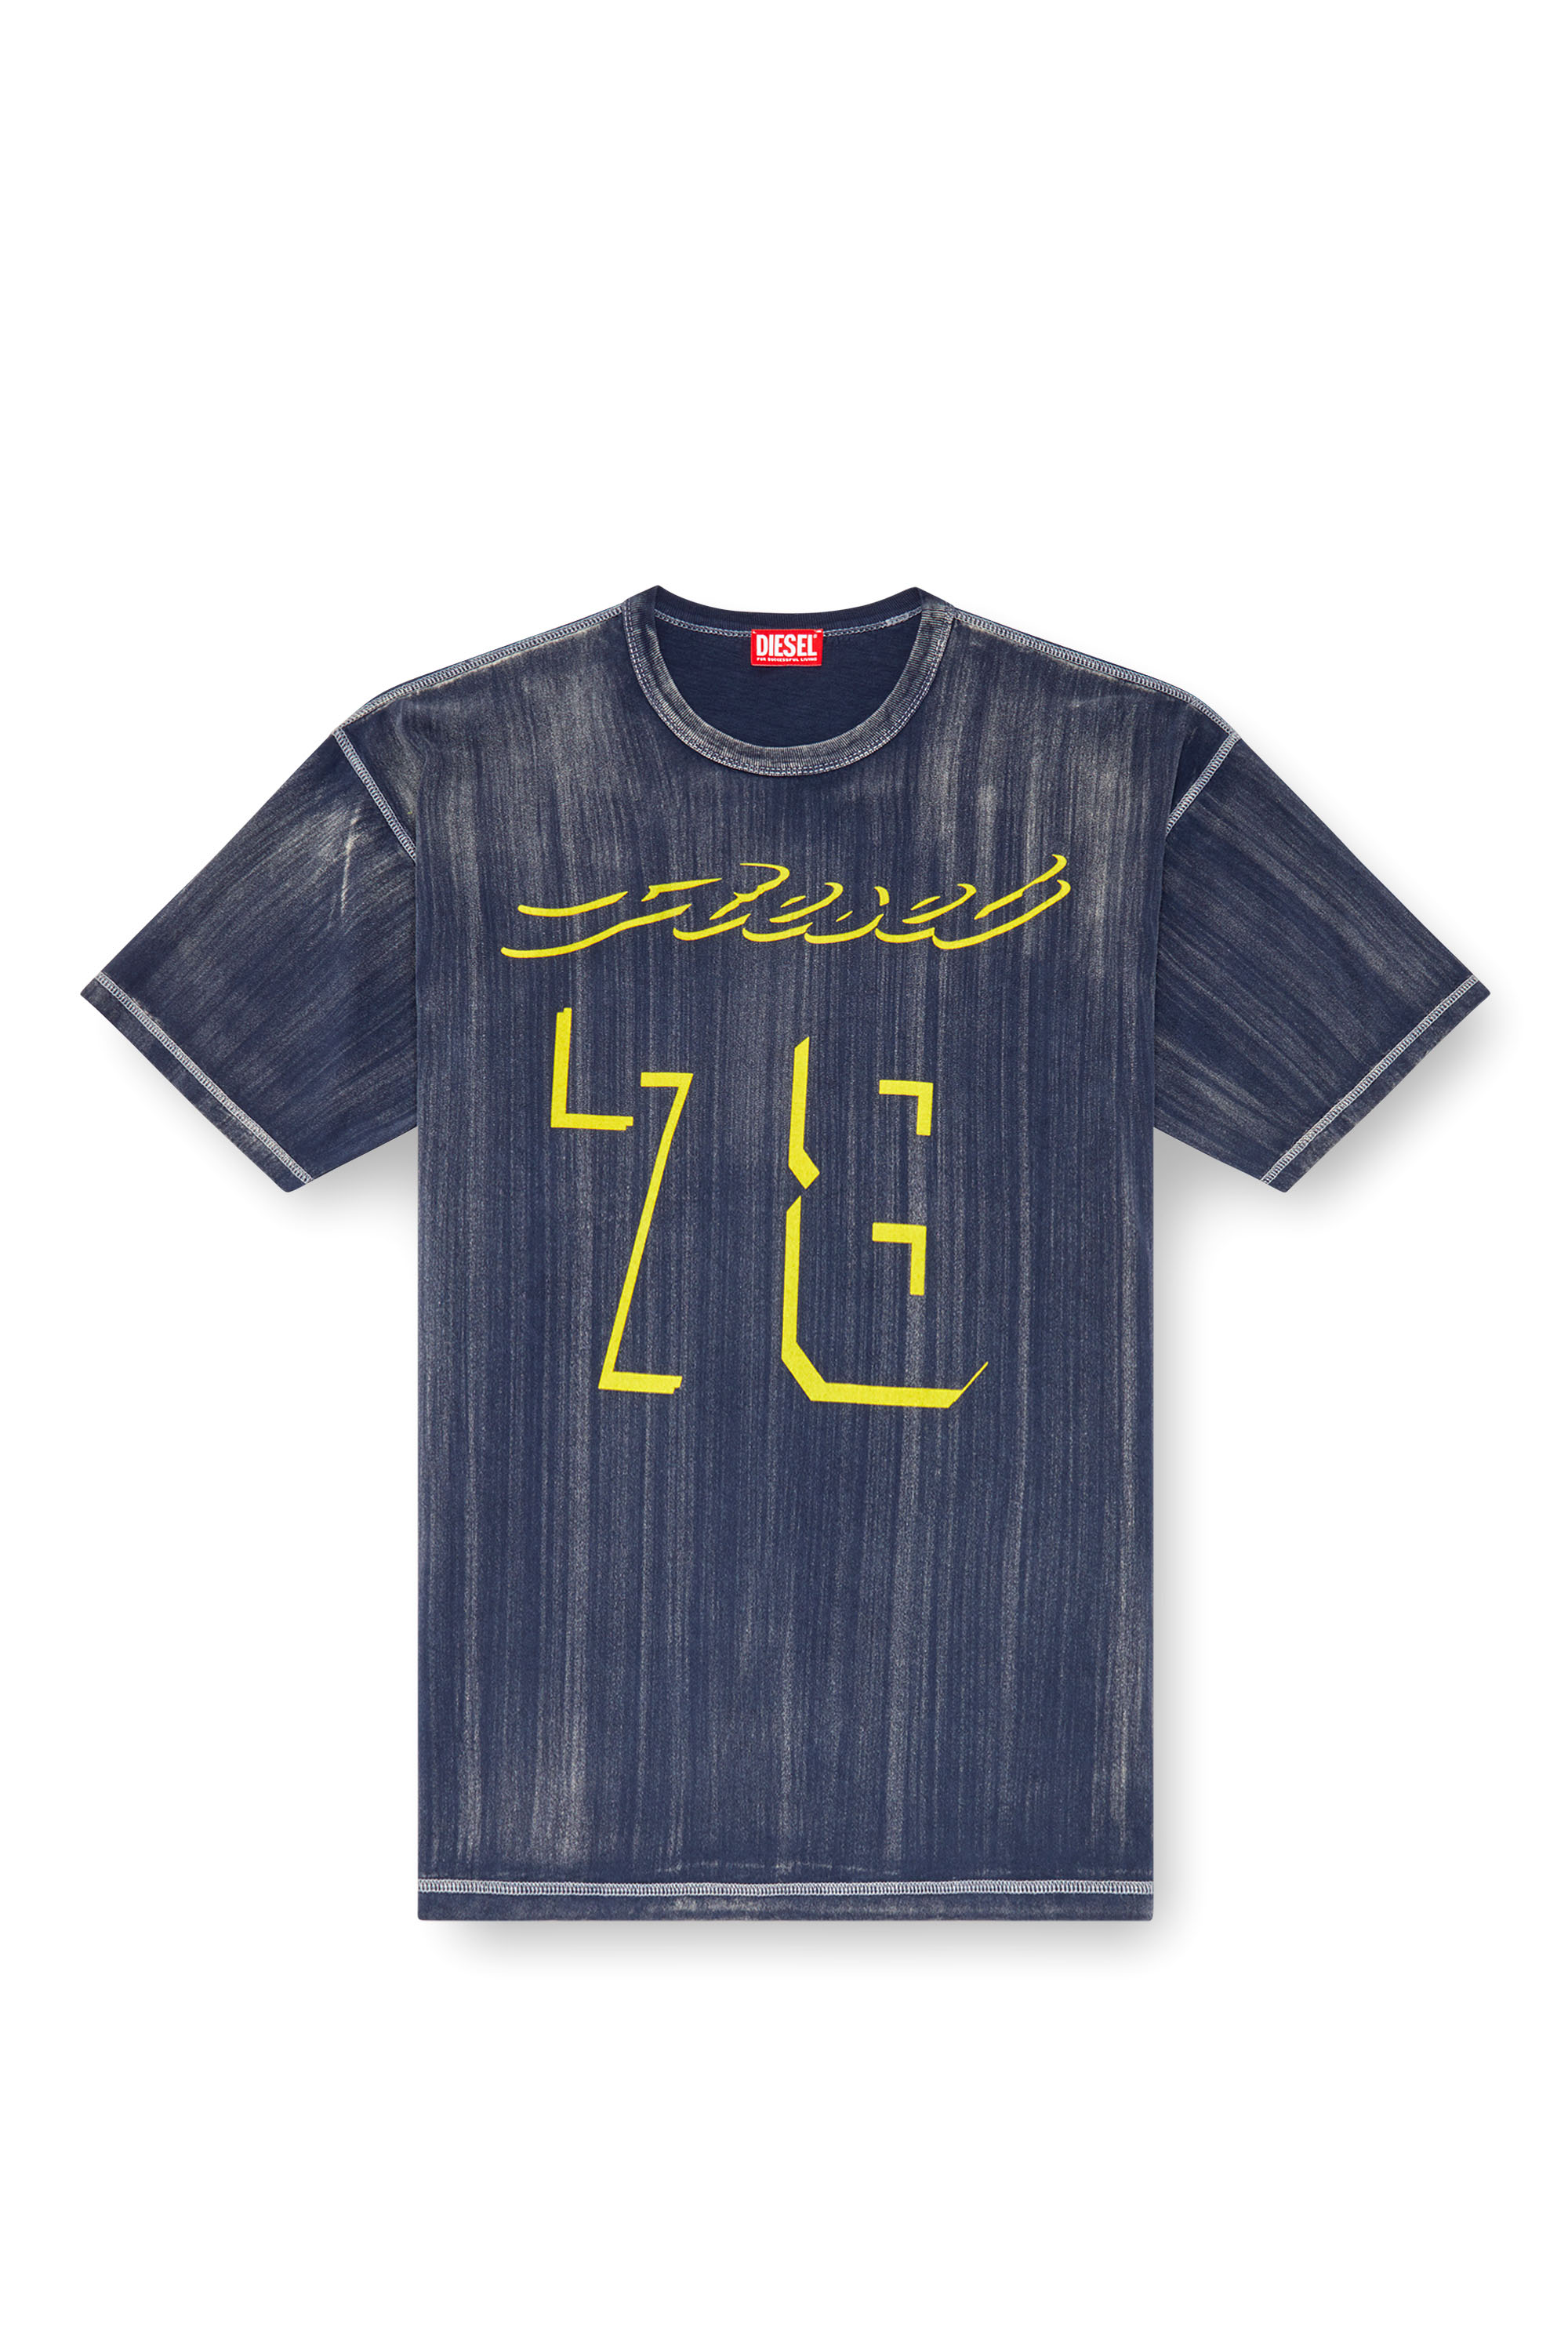 Diesel - T-BOXT-Q2, Hombre Camiseta tratada con logotipo en relieve in Azul marino - Image 3